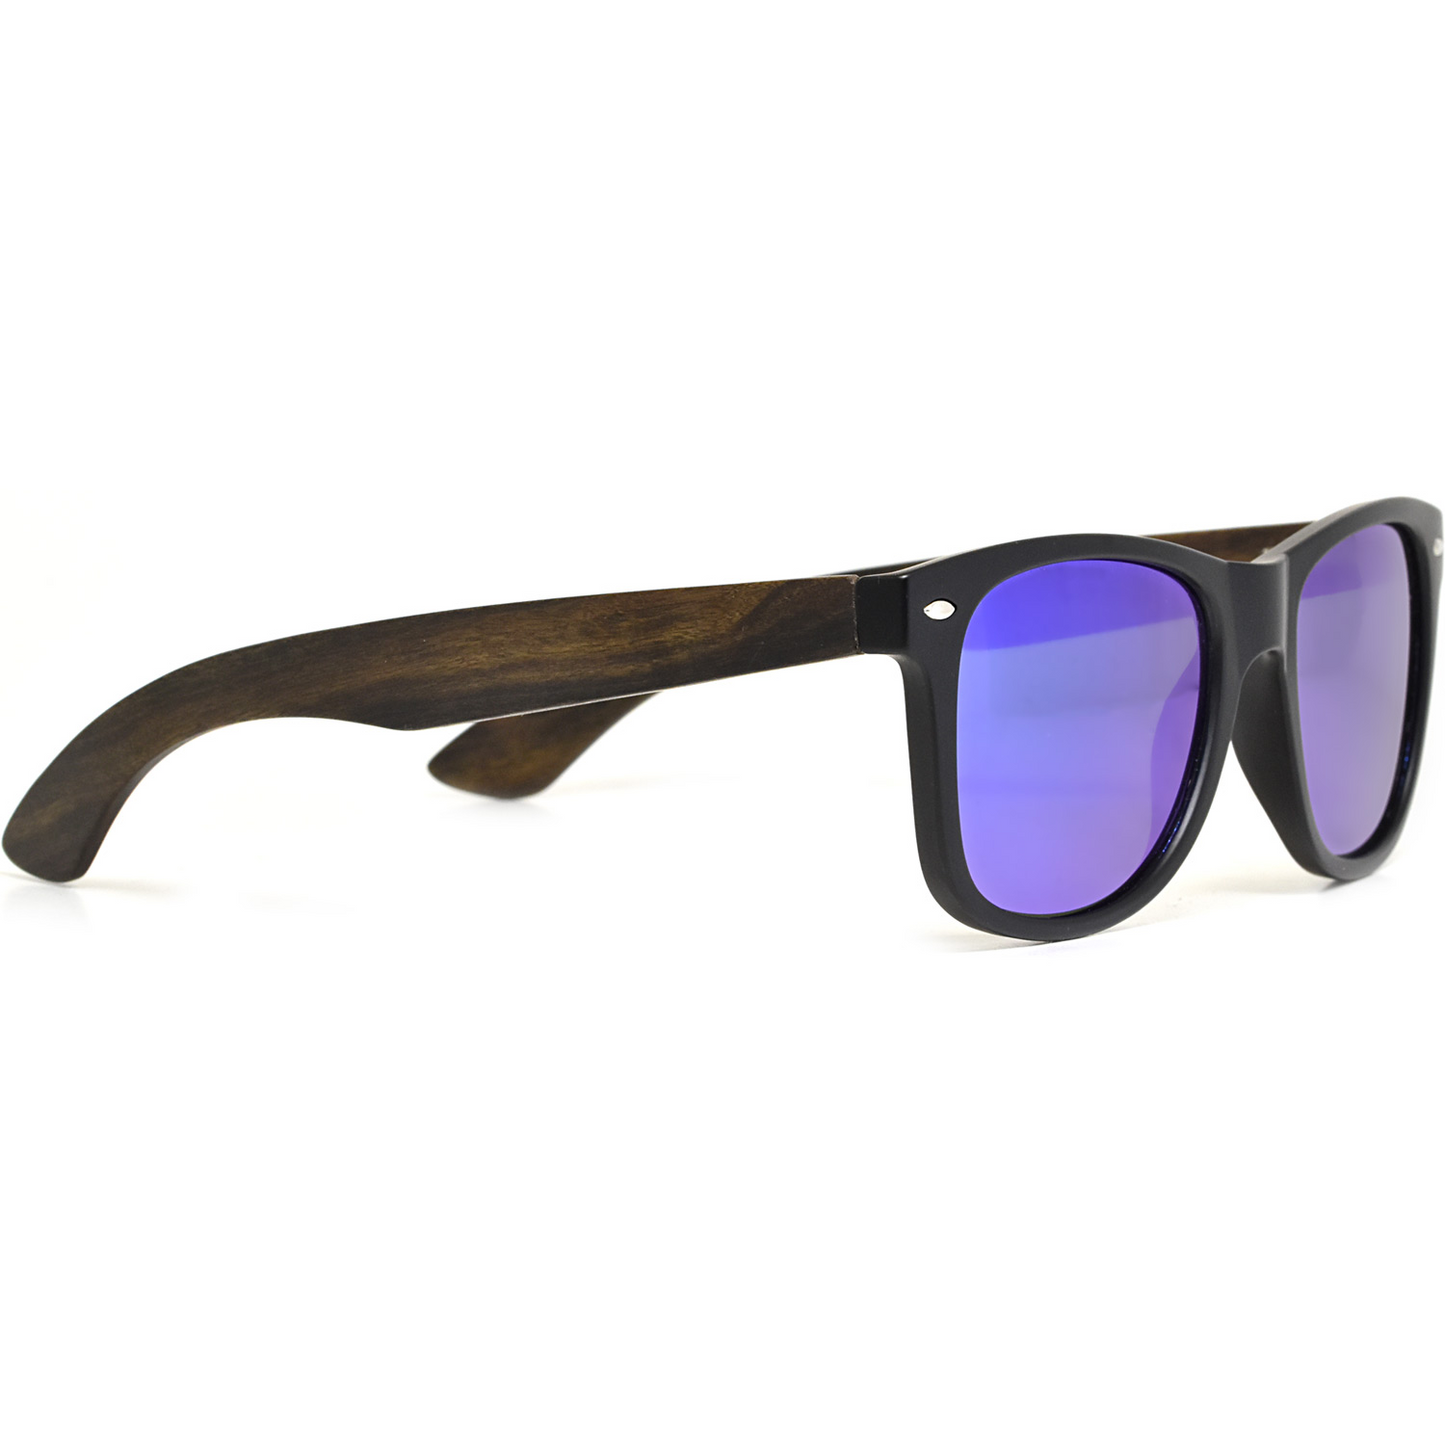 Ebony wood classic style sunglasses with blue mirrored polarized lenses